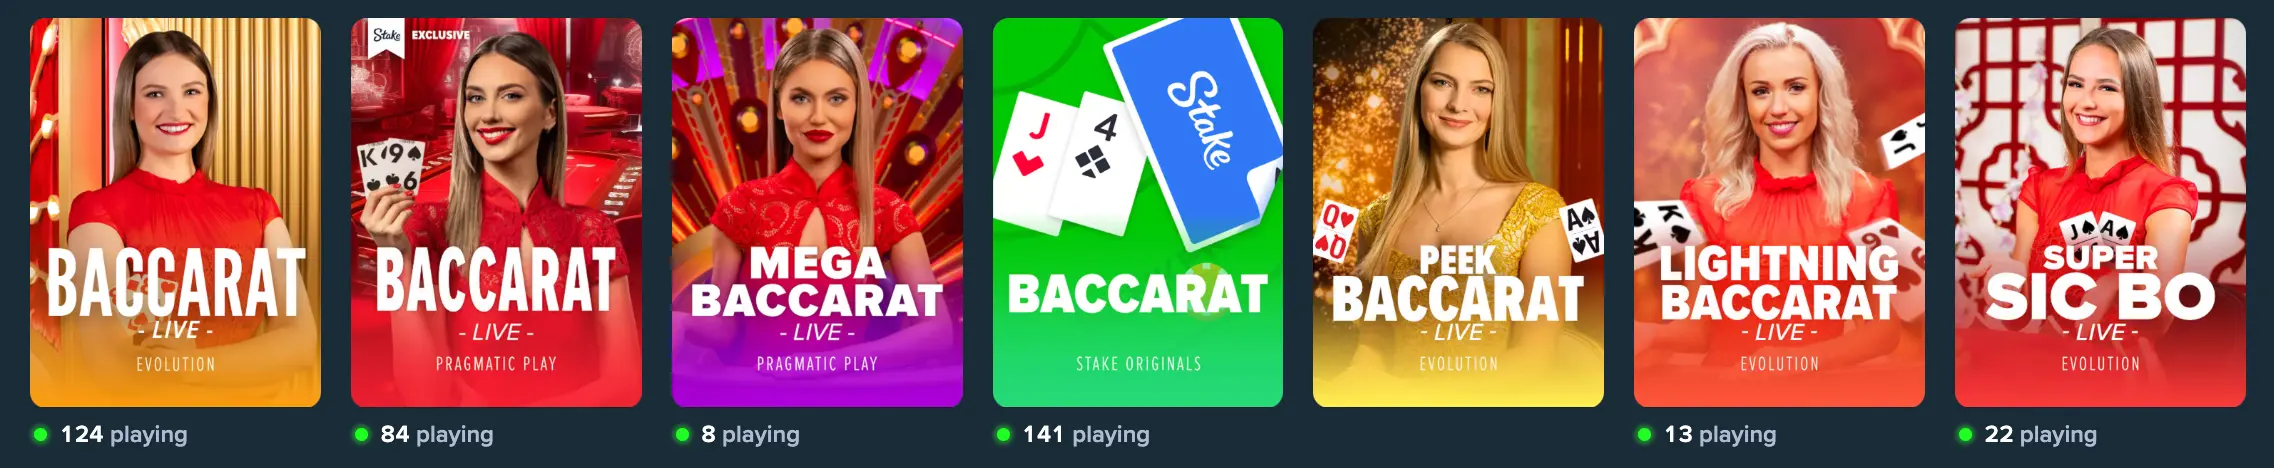 Stake Casino Baccarat